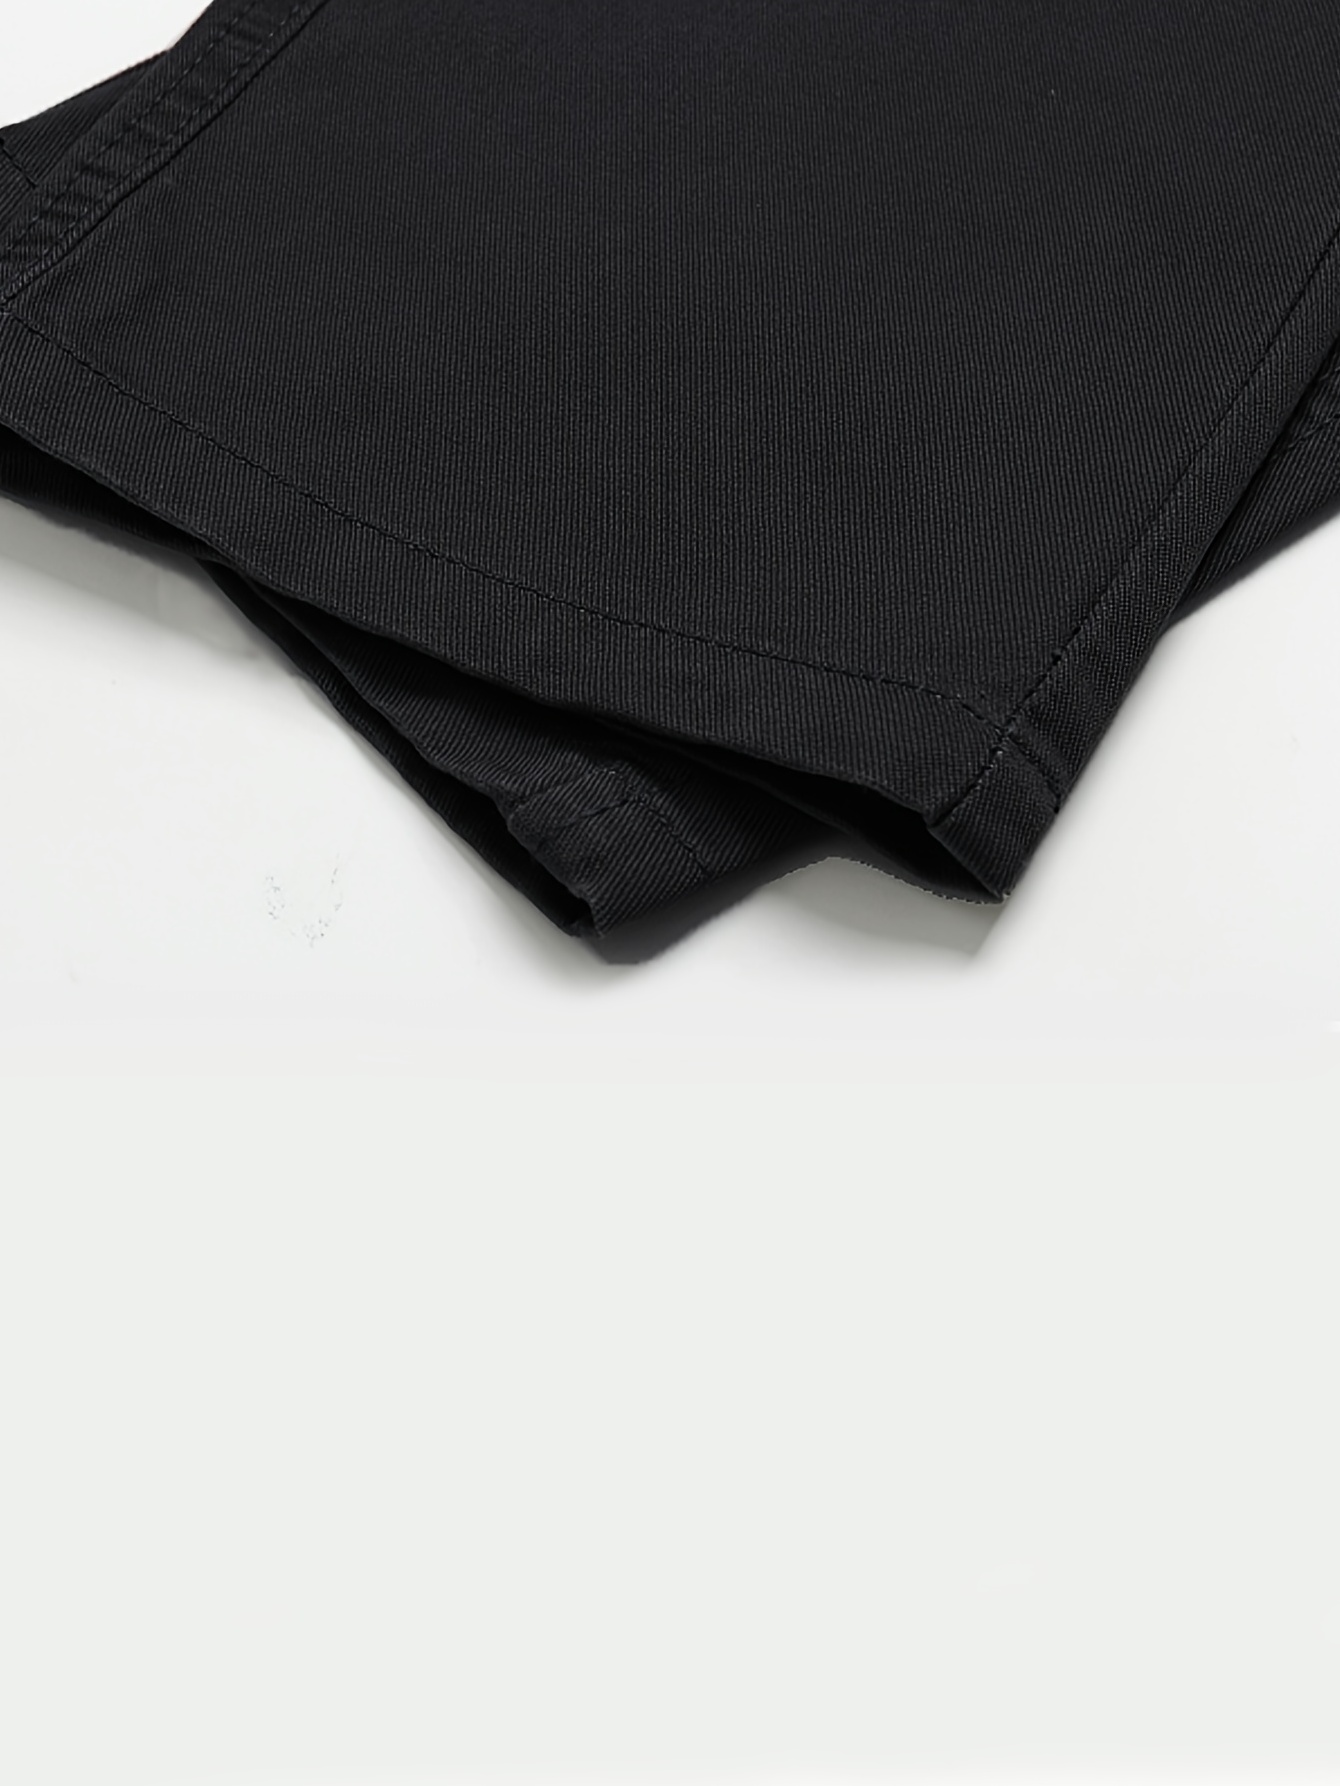 Men's Casual Black Cargo Pants With Zip Up Pockets